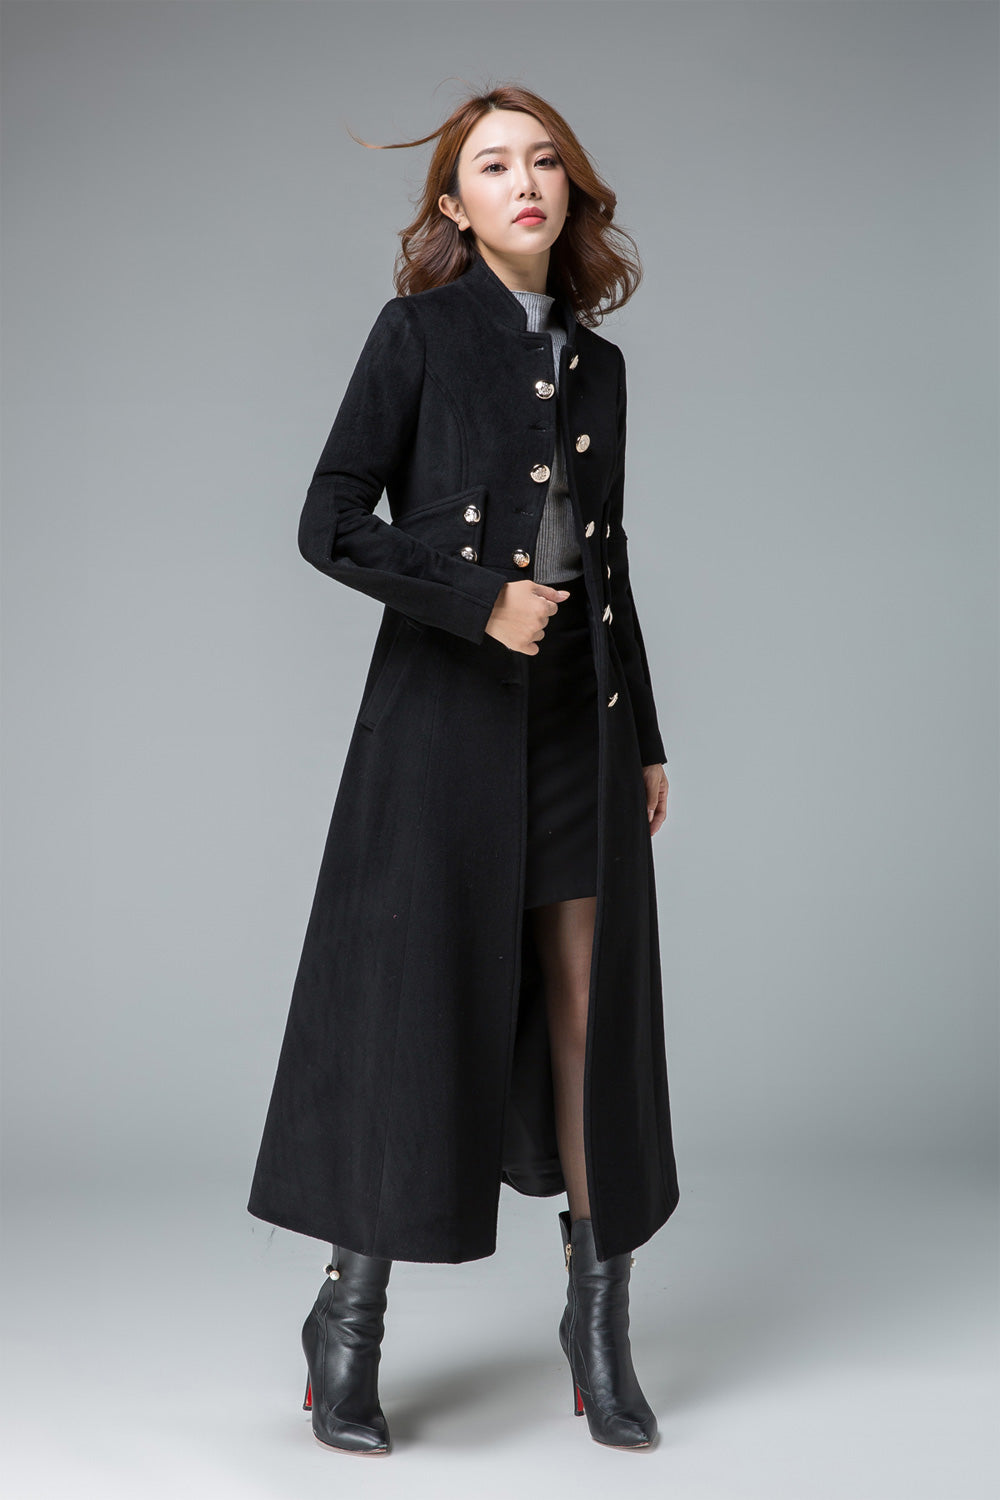 black winter coat, long wool coat, wool jacket, fitted coat, long